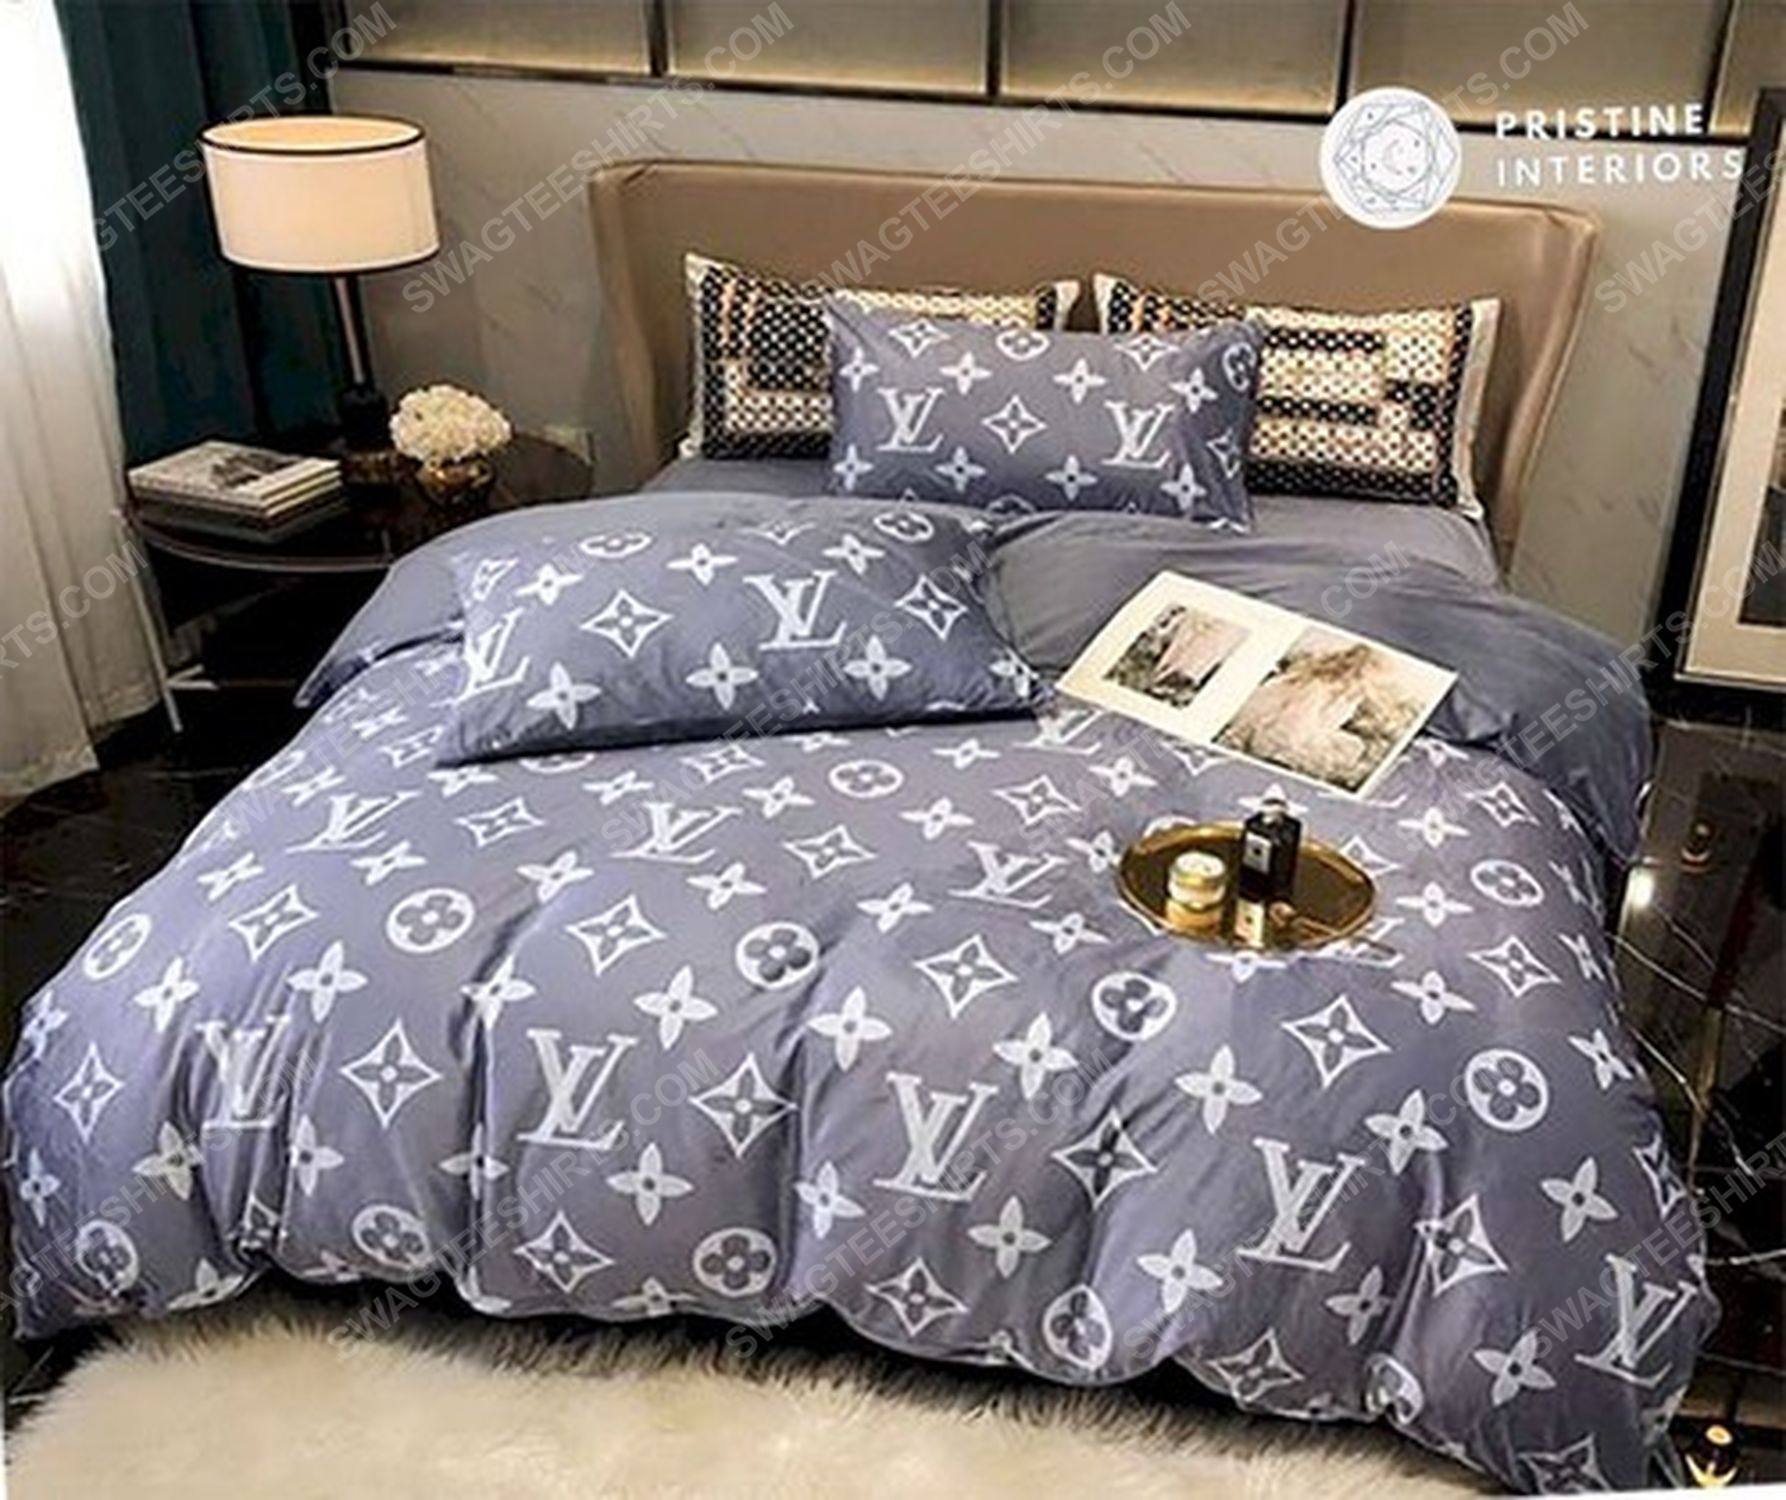 [special edition] Lv monogram full print duvet cover bedding set – maria